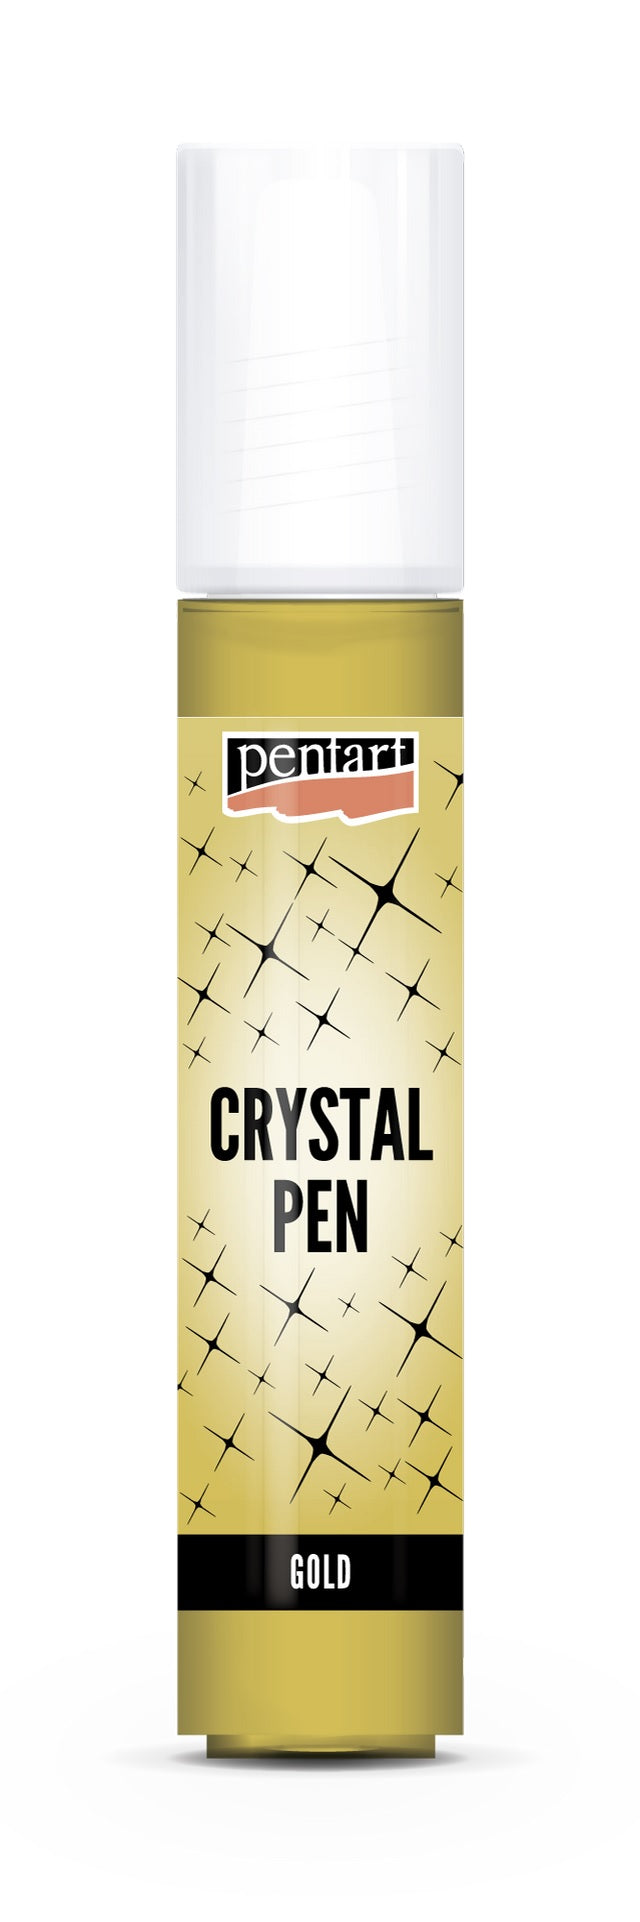 Pentart Crystal Pen, 30 mL Gold